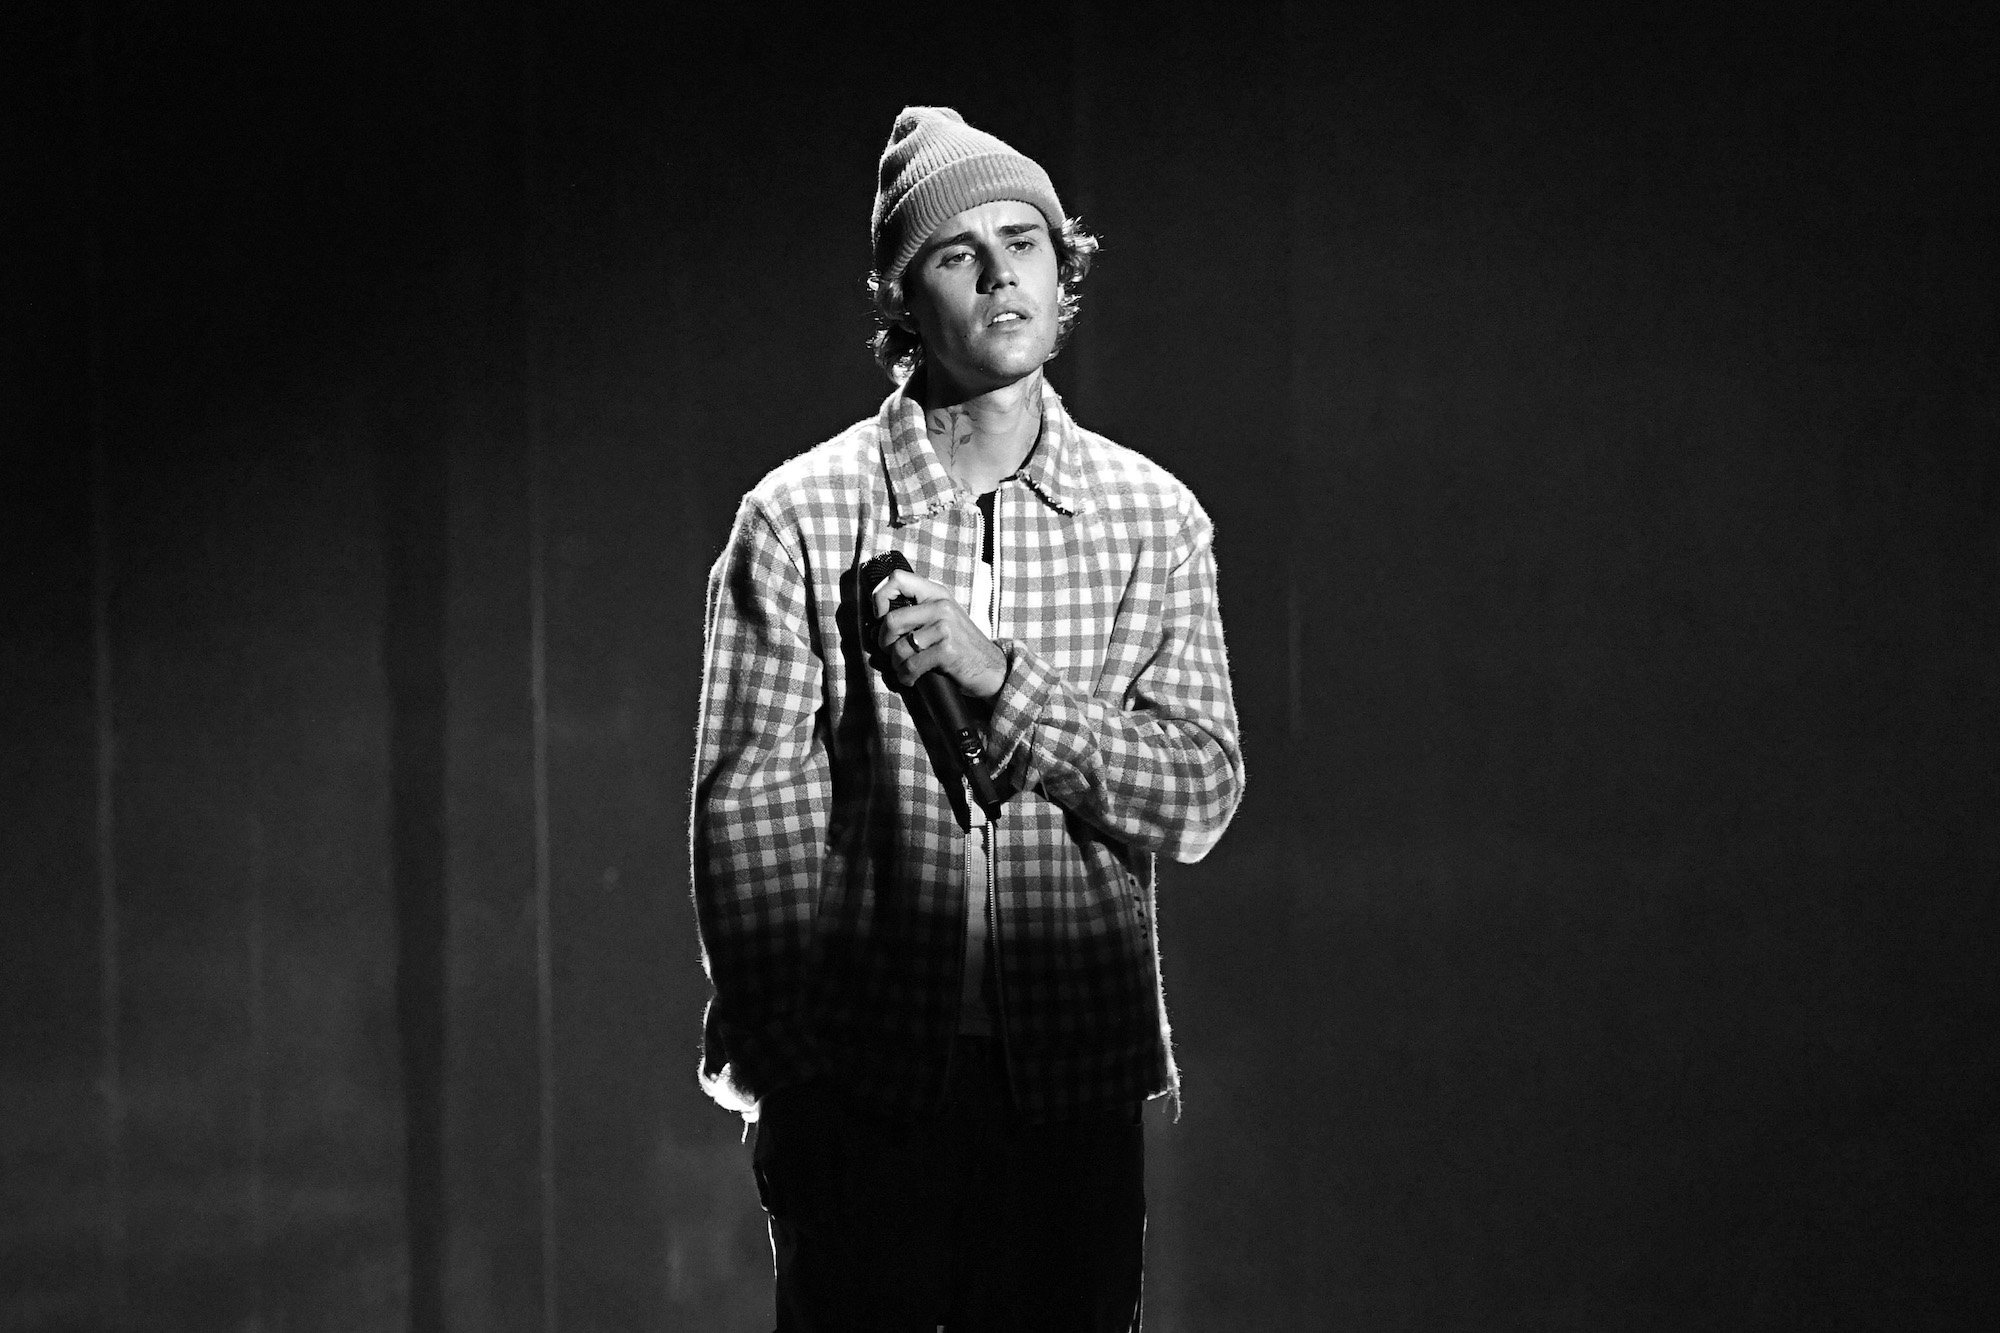 Justin Bieber performing at the 2020 American Music Awards